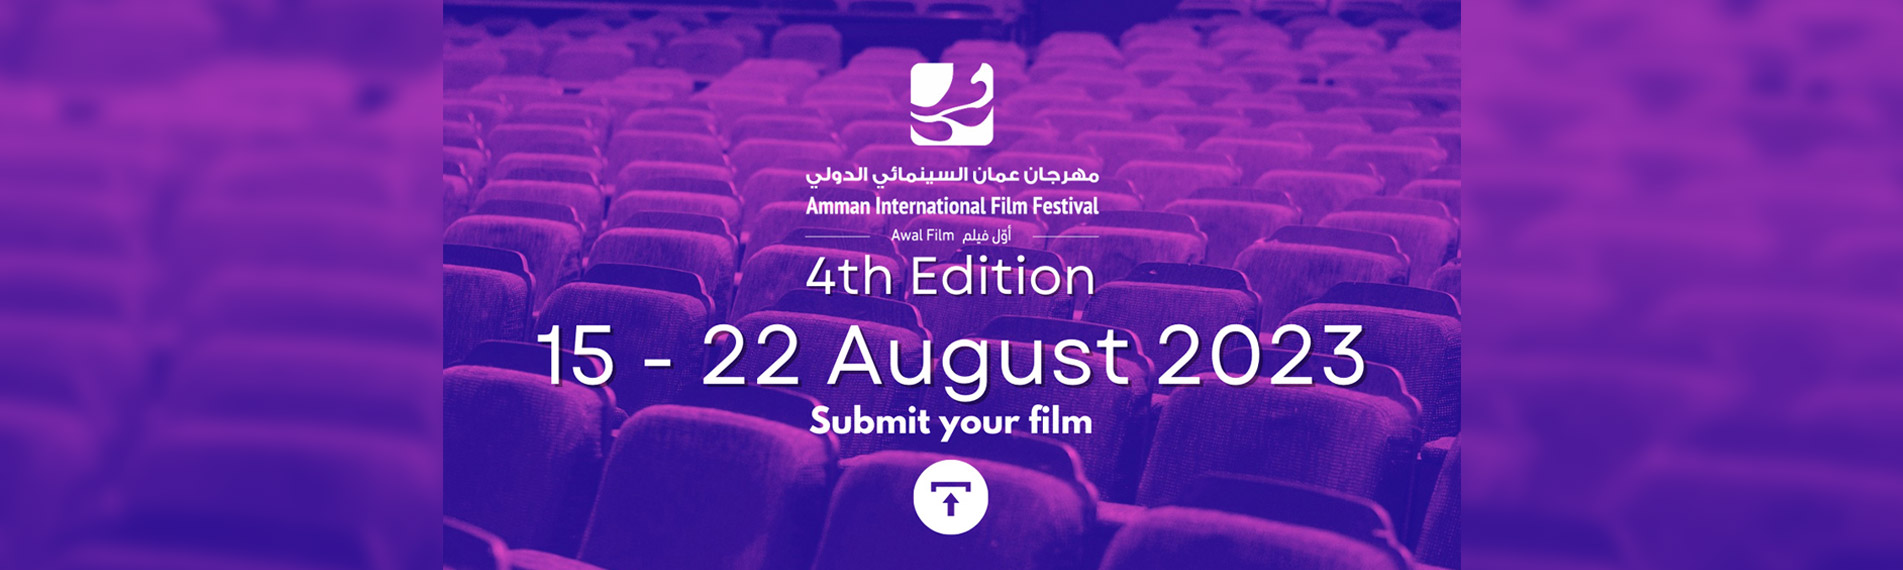 Amman International Film Festival